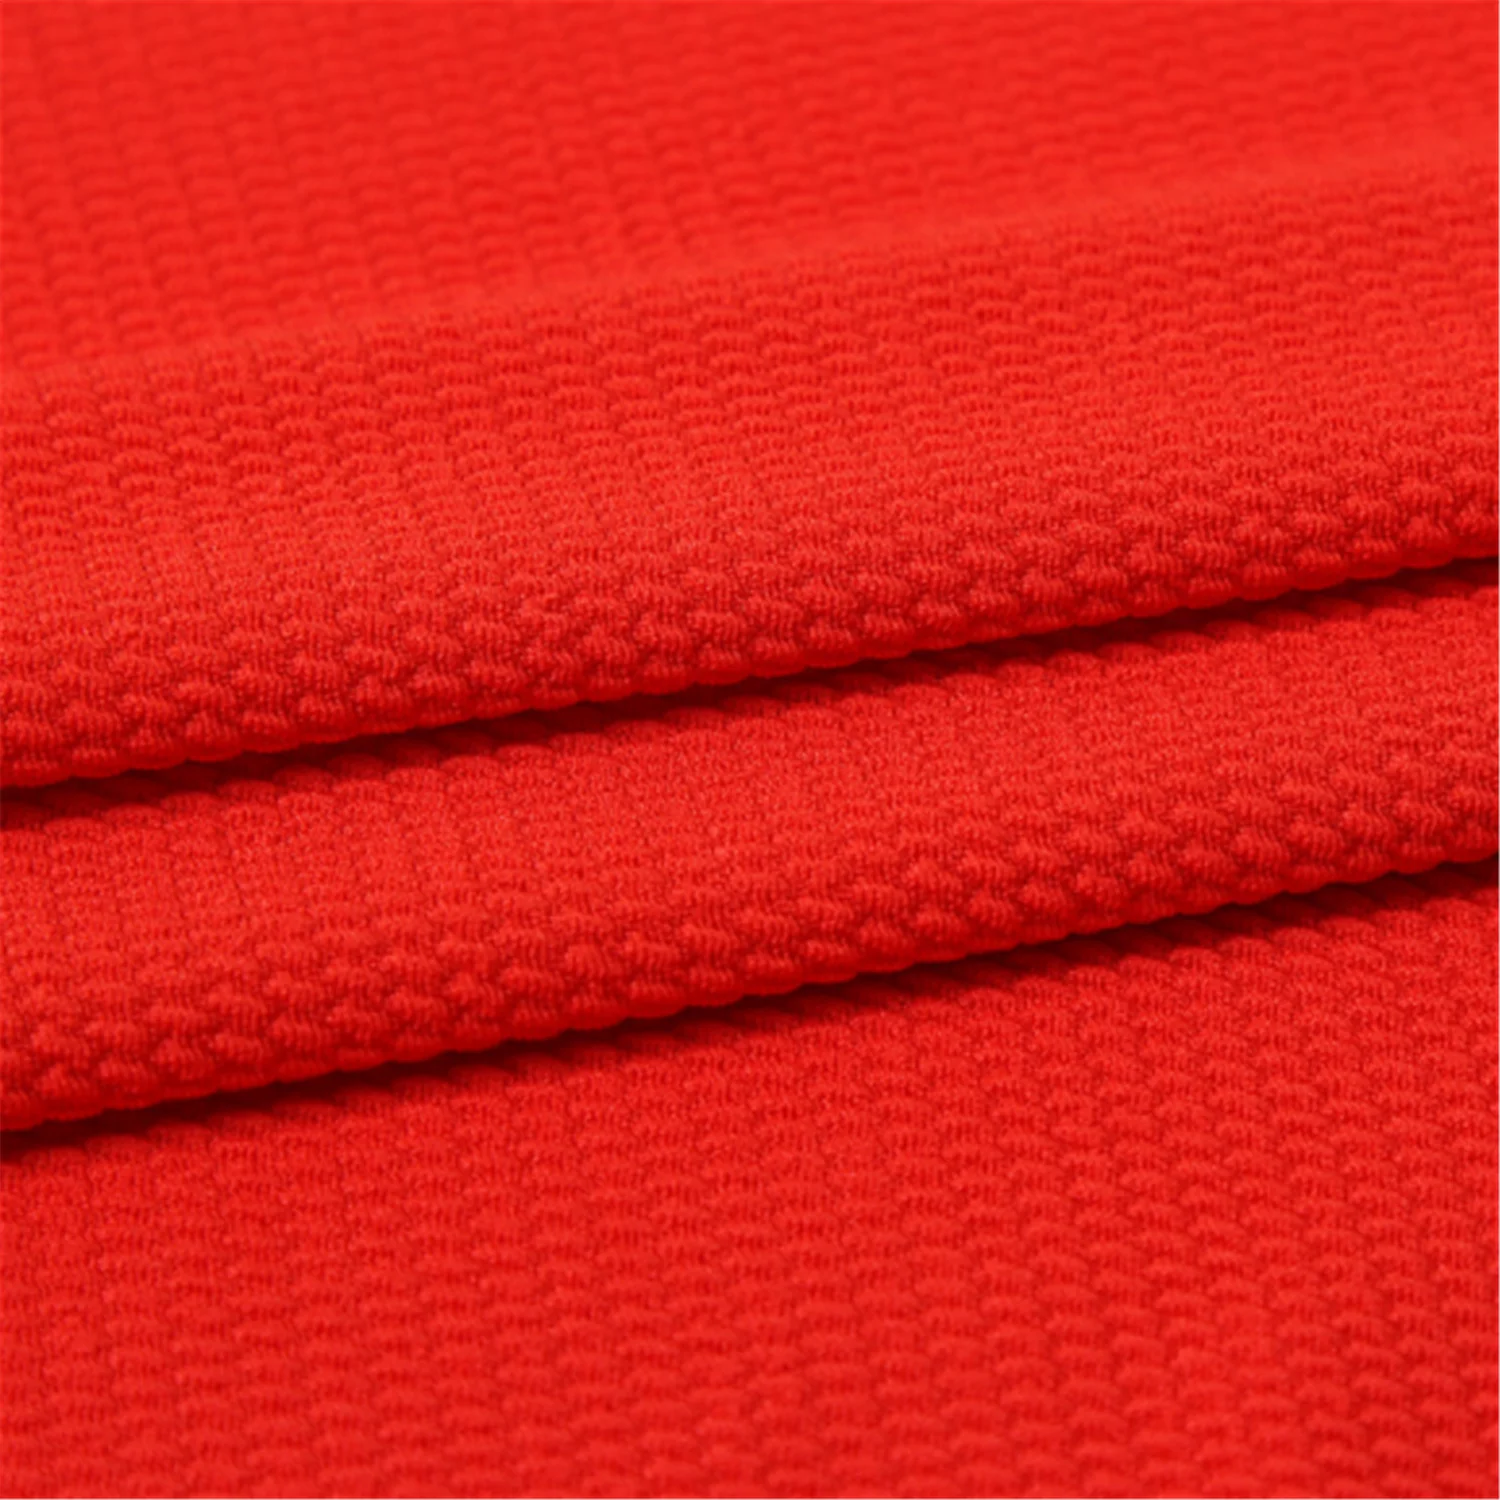 
Hot sales bullet liverpool elastane 96% polyester 4% spandex knit plain dyed dress jacquard fabric 